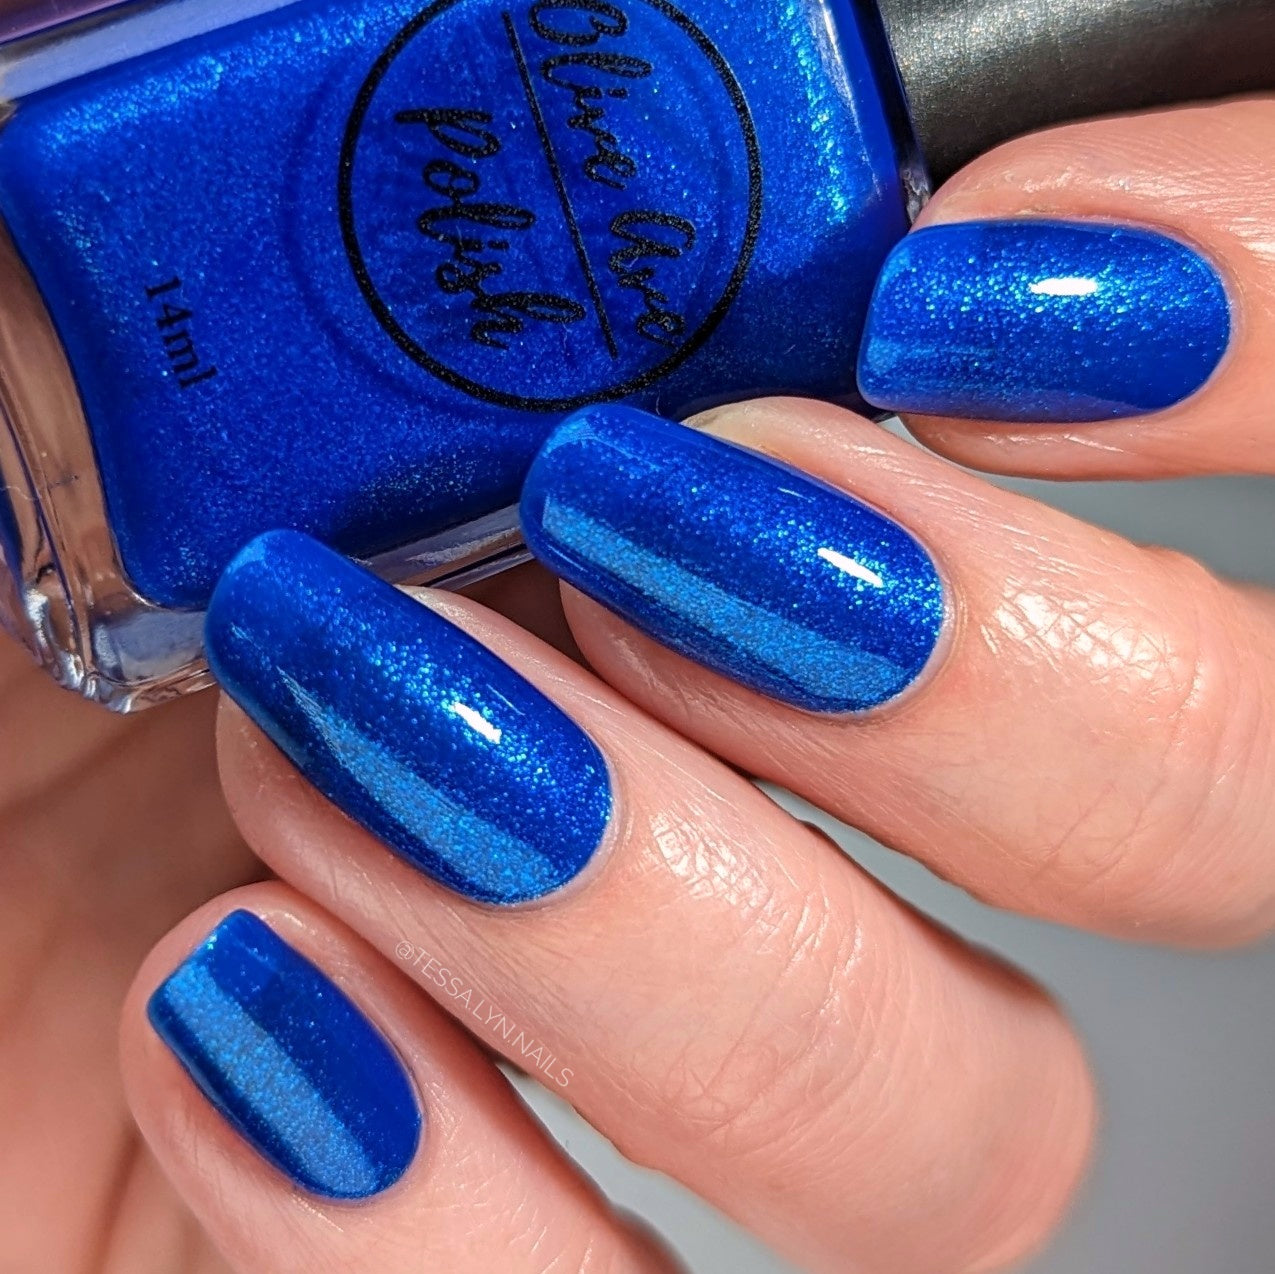 Blue glitter nail polish swatch on pale skin tone